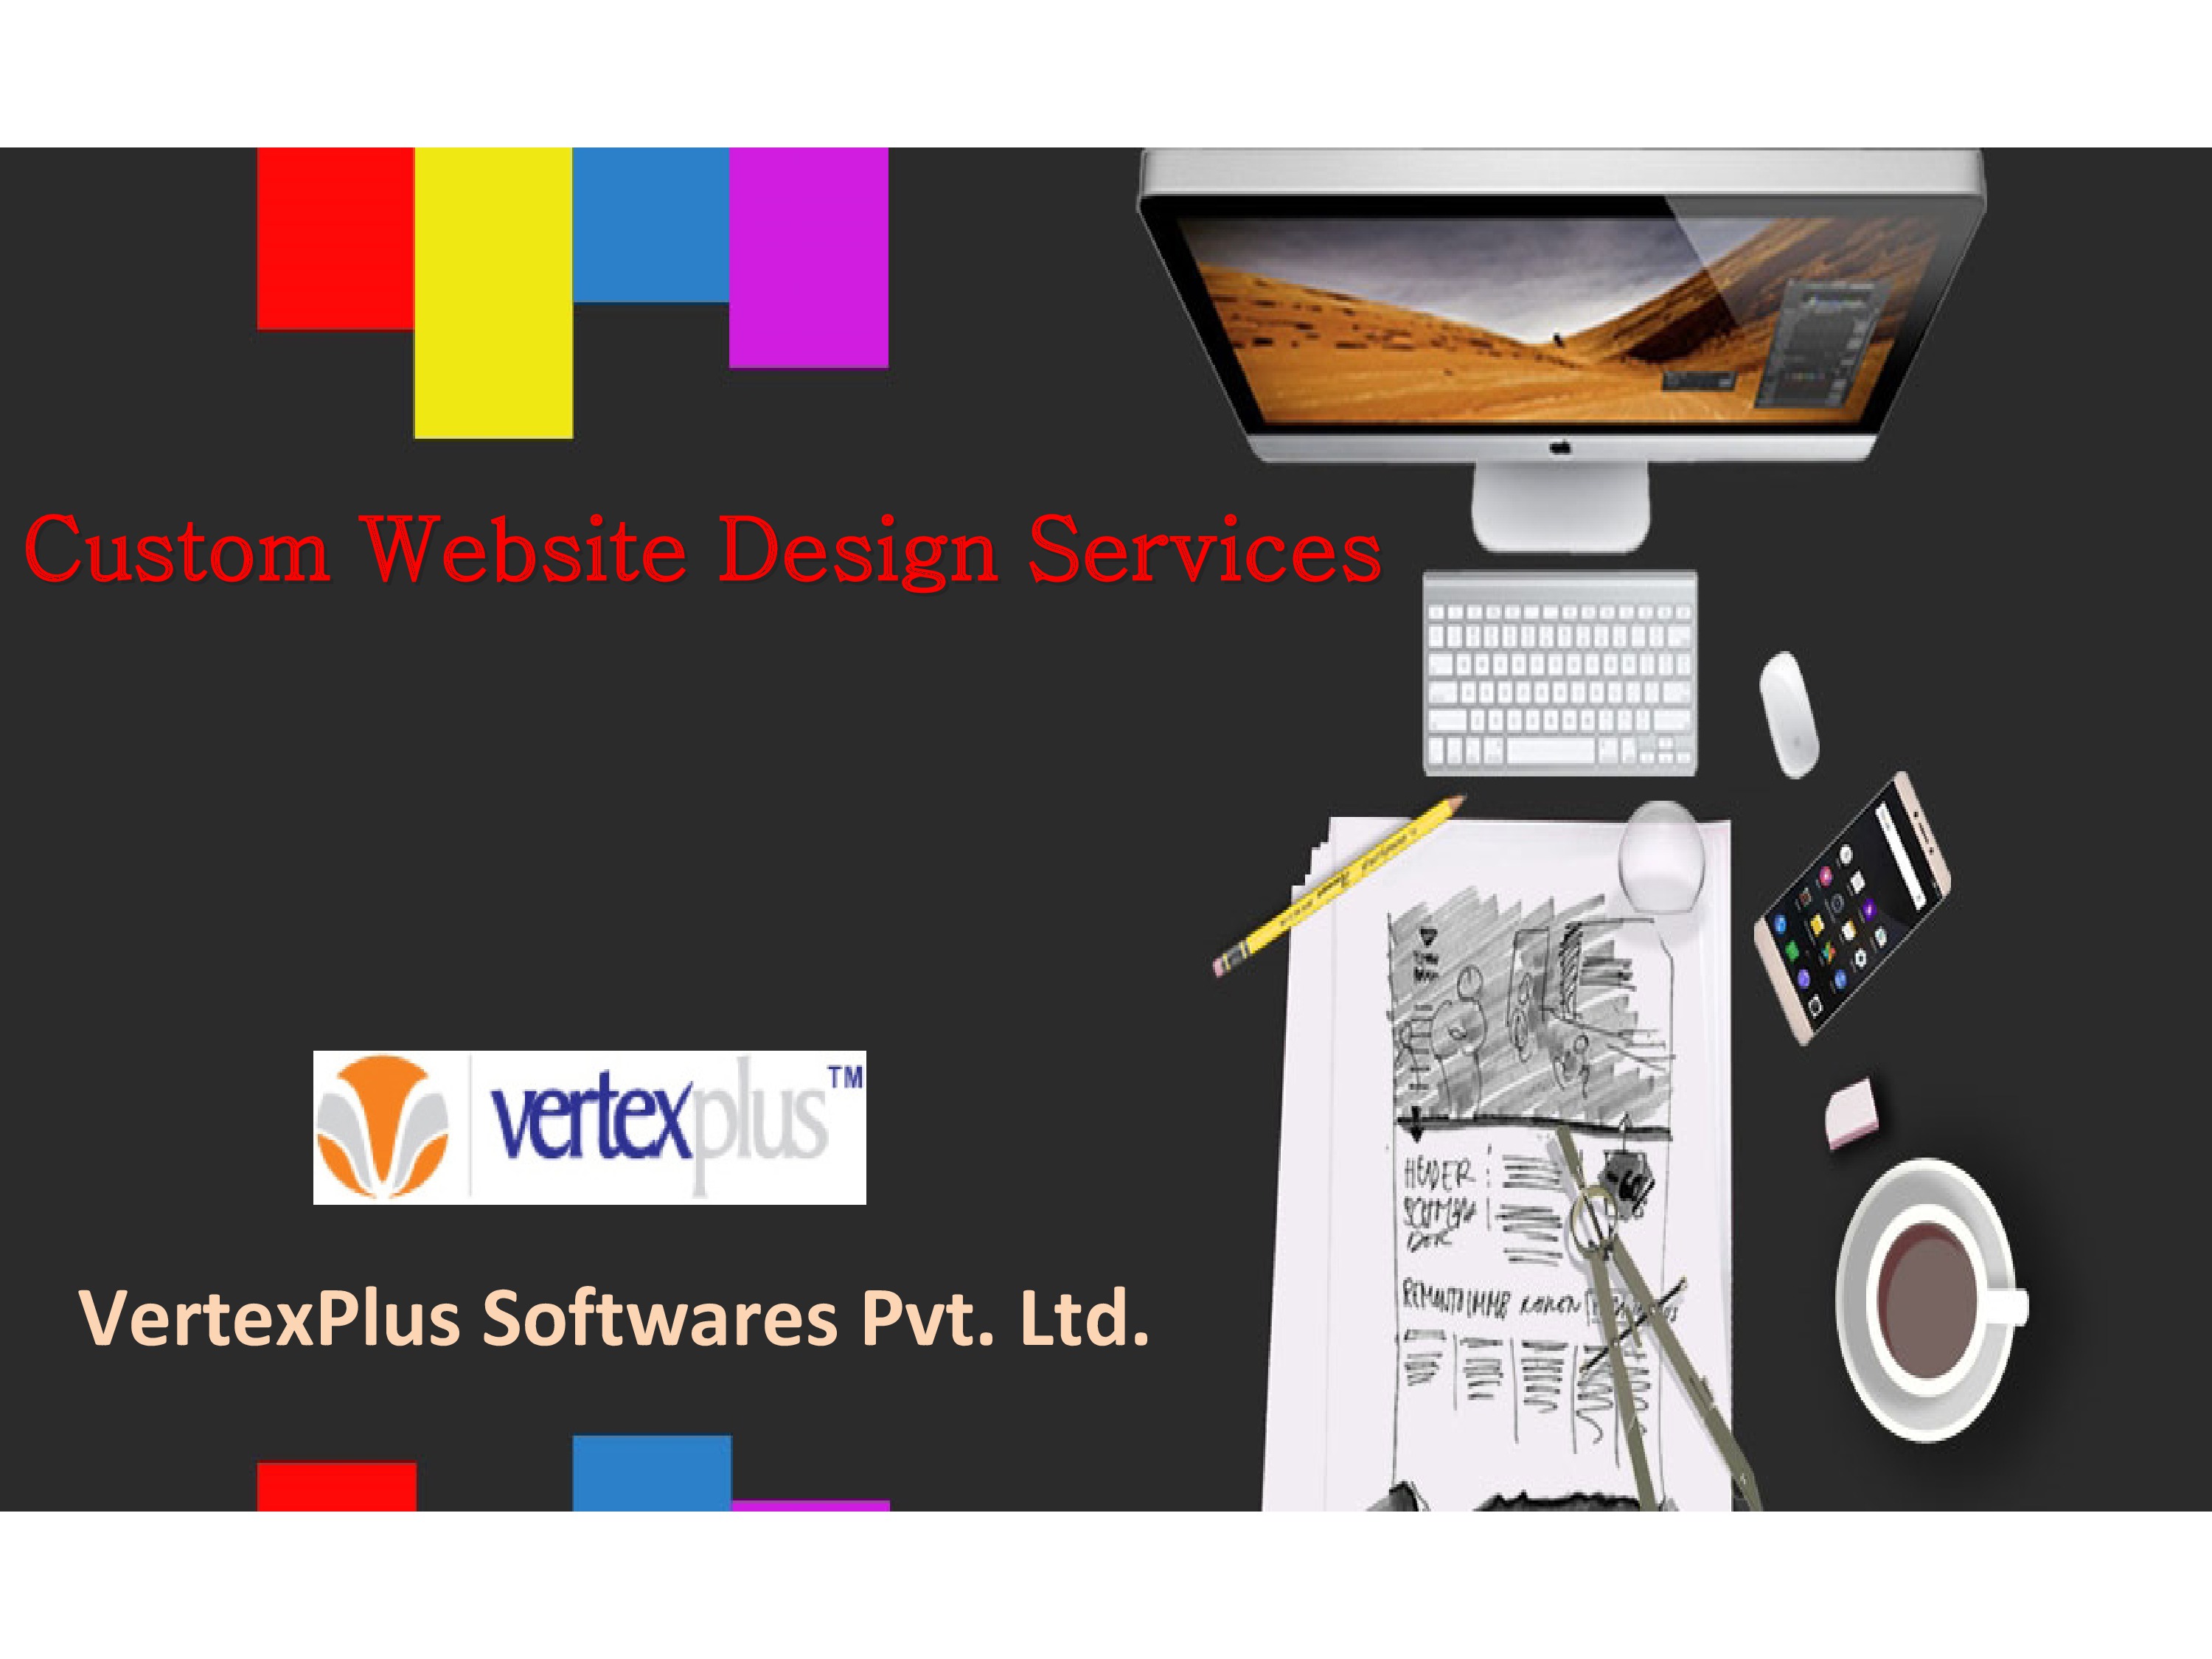 Web Design Company India || VertexPlus Softwares Get custom website design services to make great online presence worldwide!!! For more  details visit http://www.vertexplus.com/website-designing.
 by vertexplus